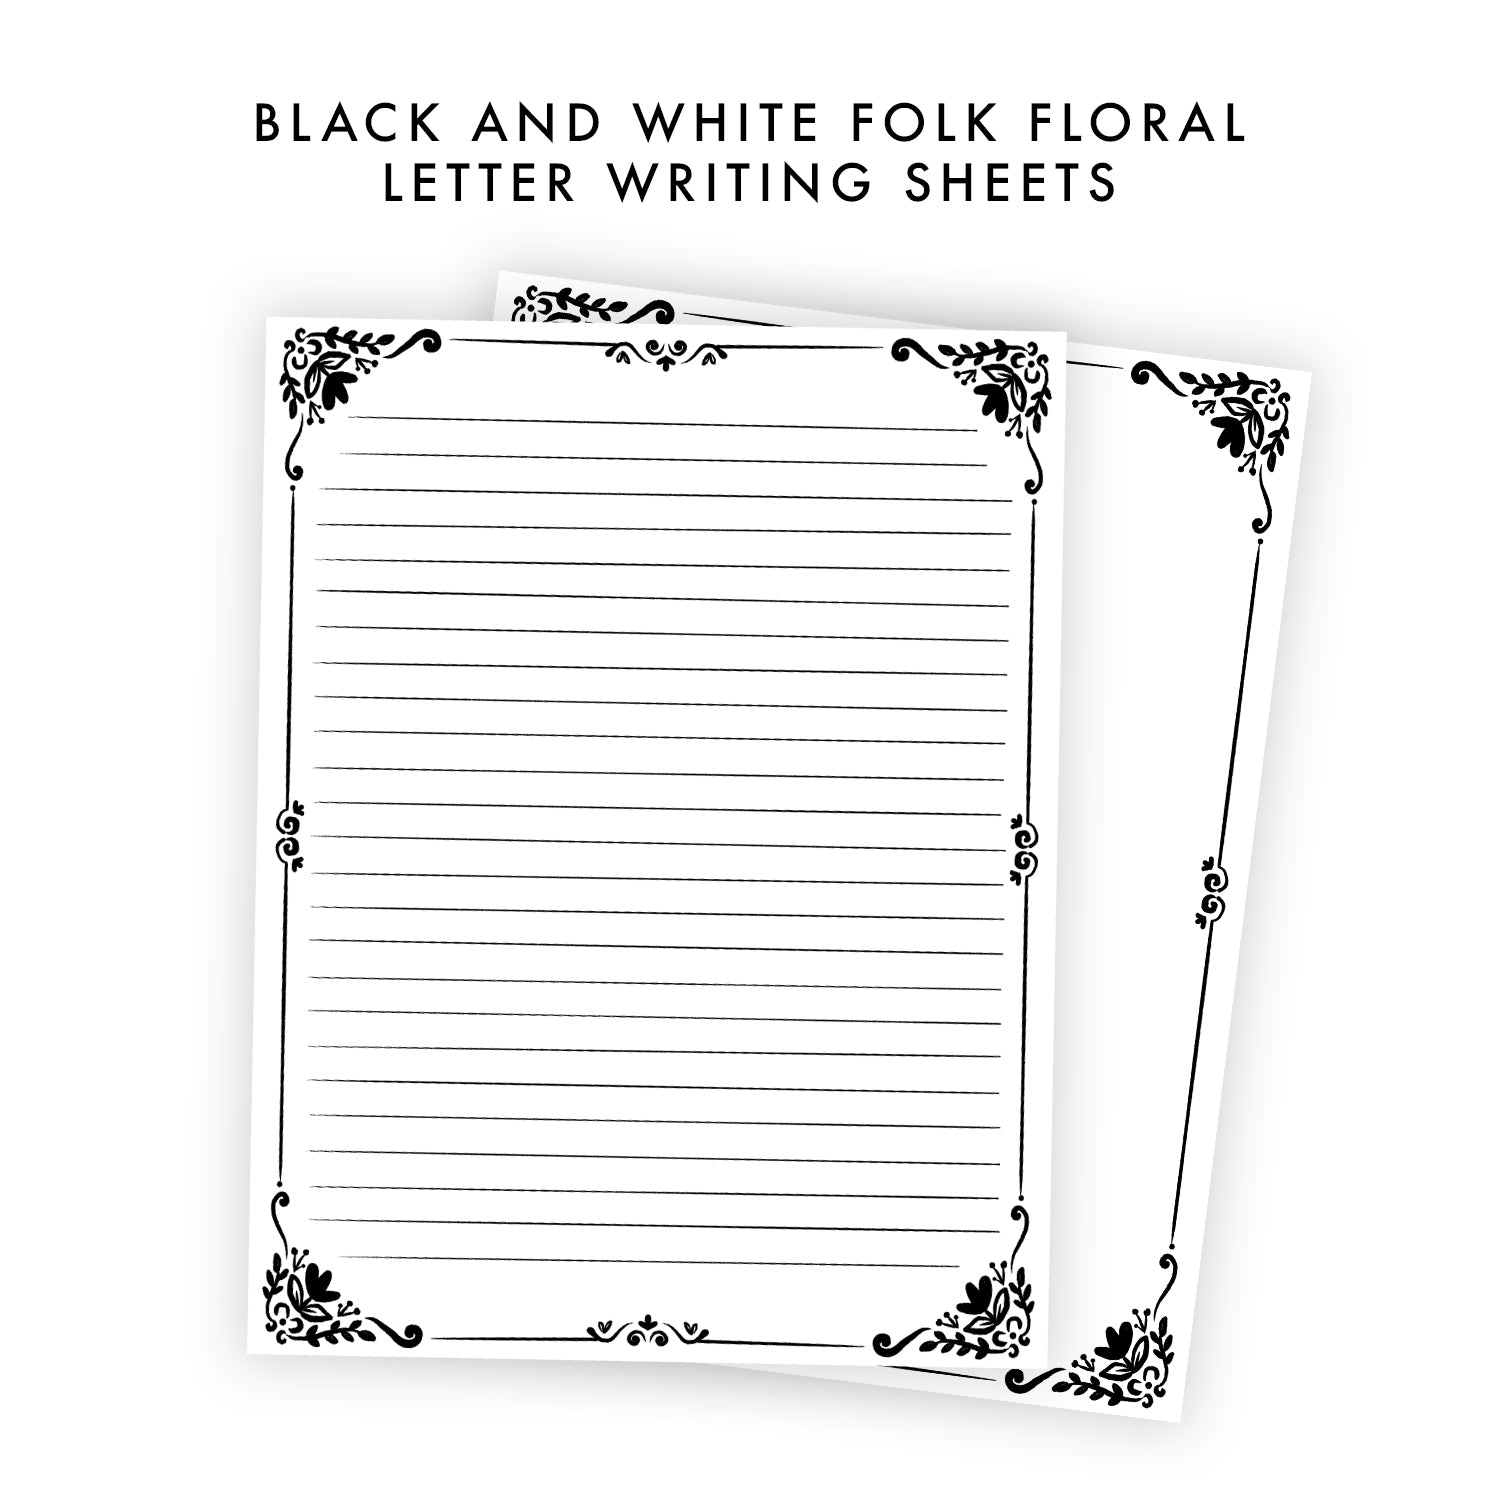 Printable Letter Writing Sheets - Folk Floral